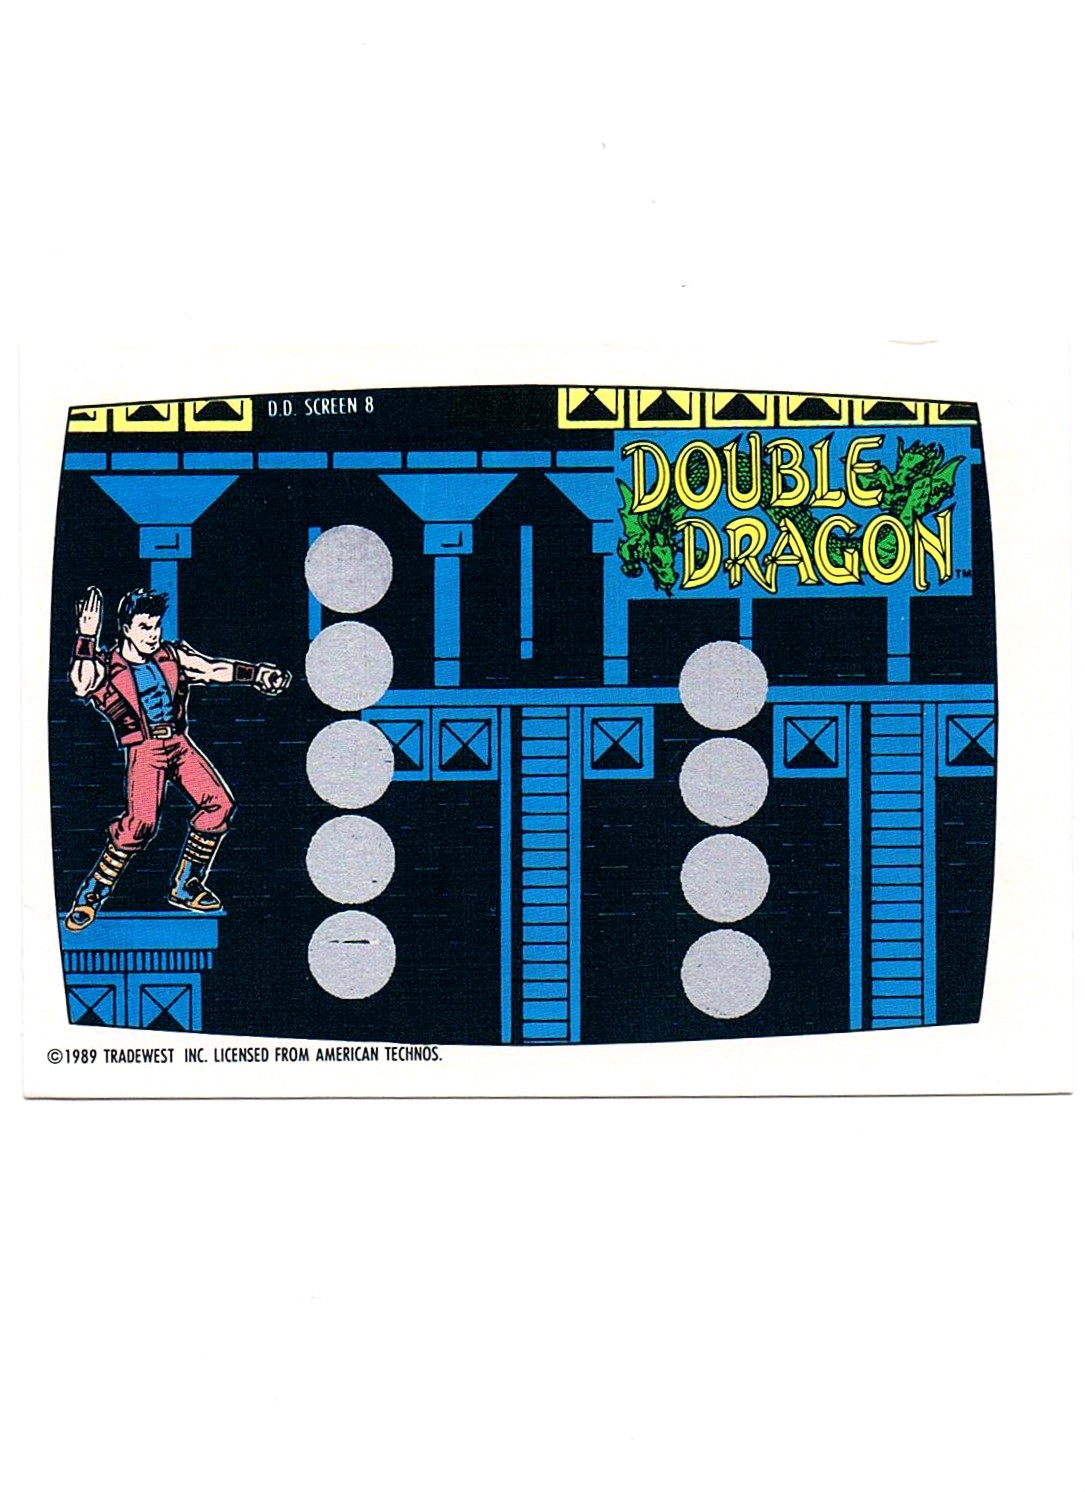 Double Dragon - NES Rubbelkarte - Screen 8 Topps / Nintendo 1989